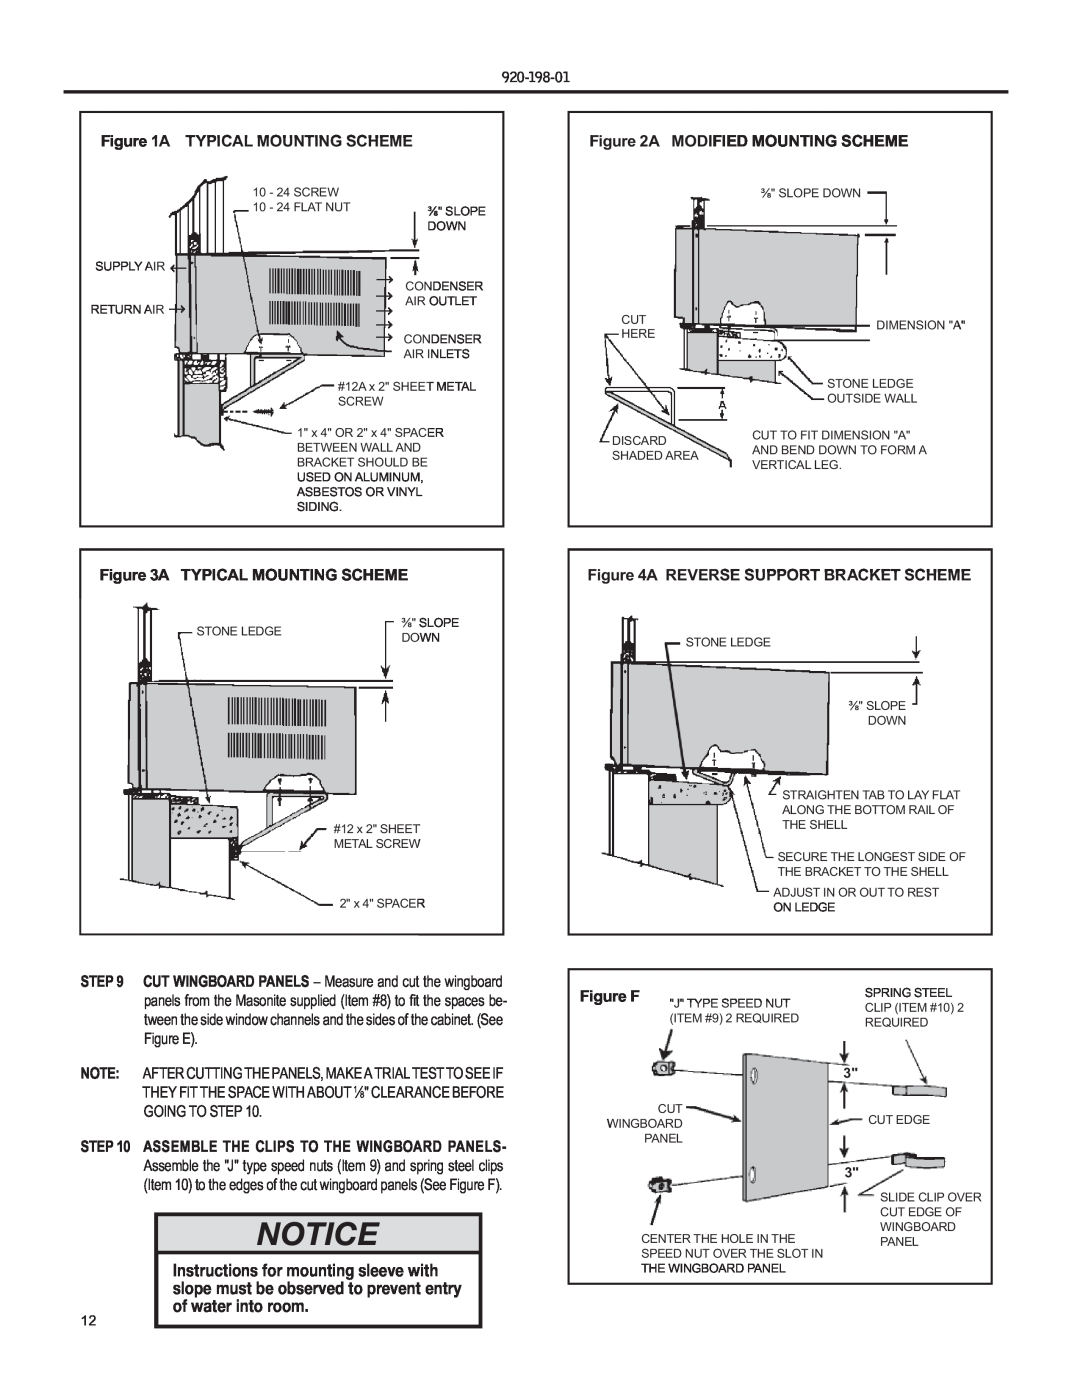 Friedrich YS09 A Typical Mounting Scheme, A Modified Mounting Scheme, A Reverse Support Bracket Scheme, Figure F 